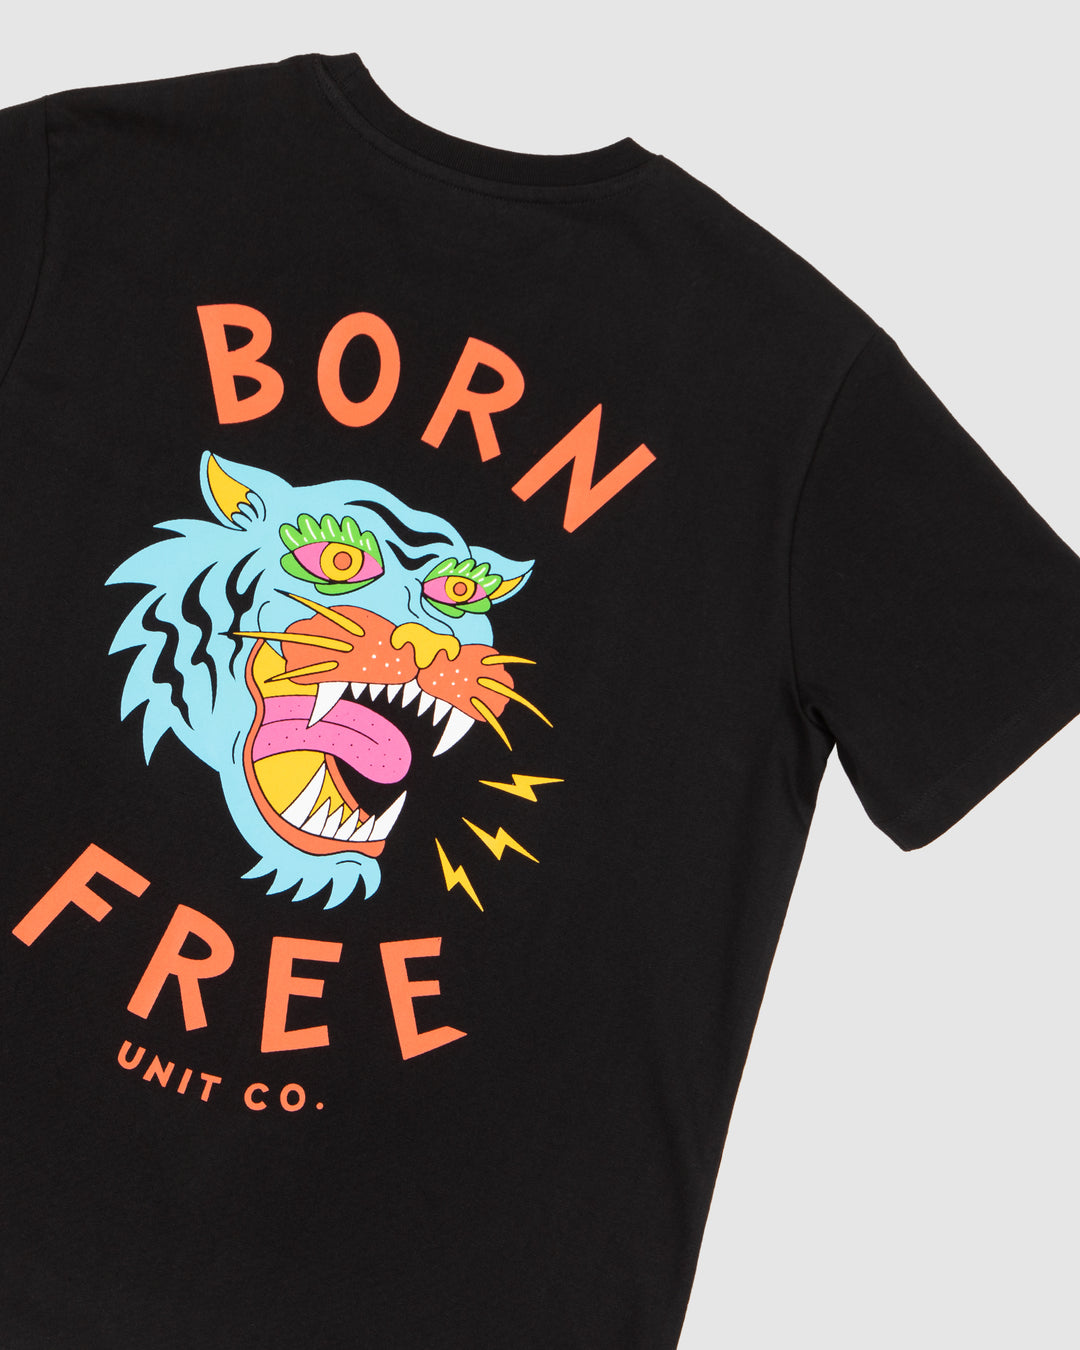 UNIT Youth Born Free T-Shirt